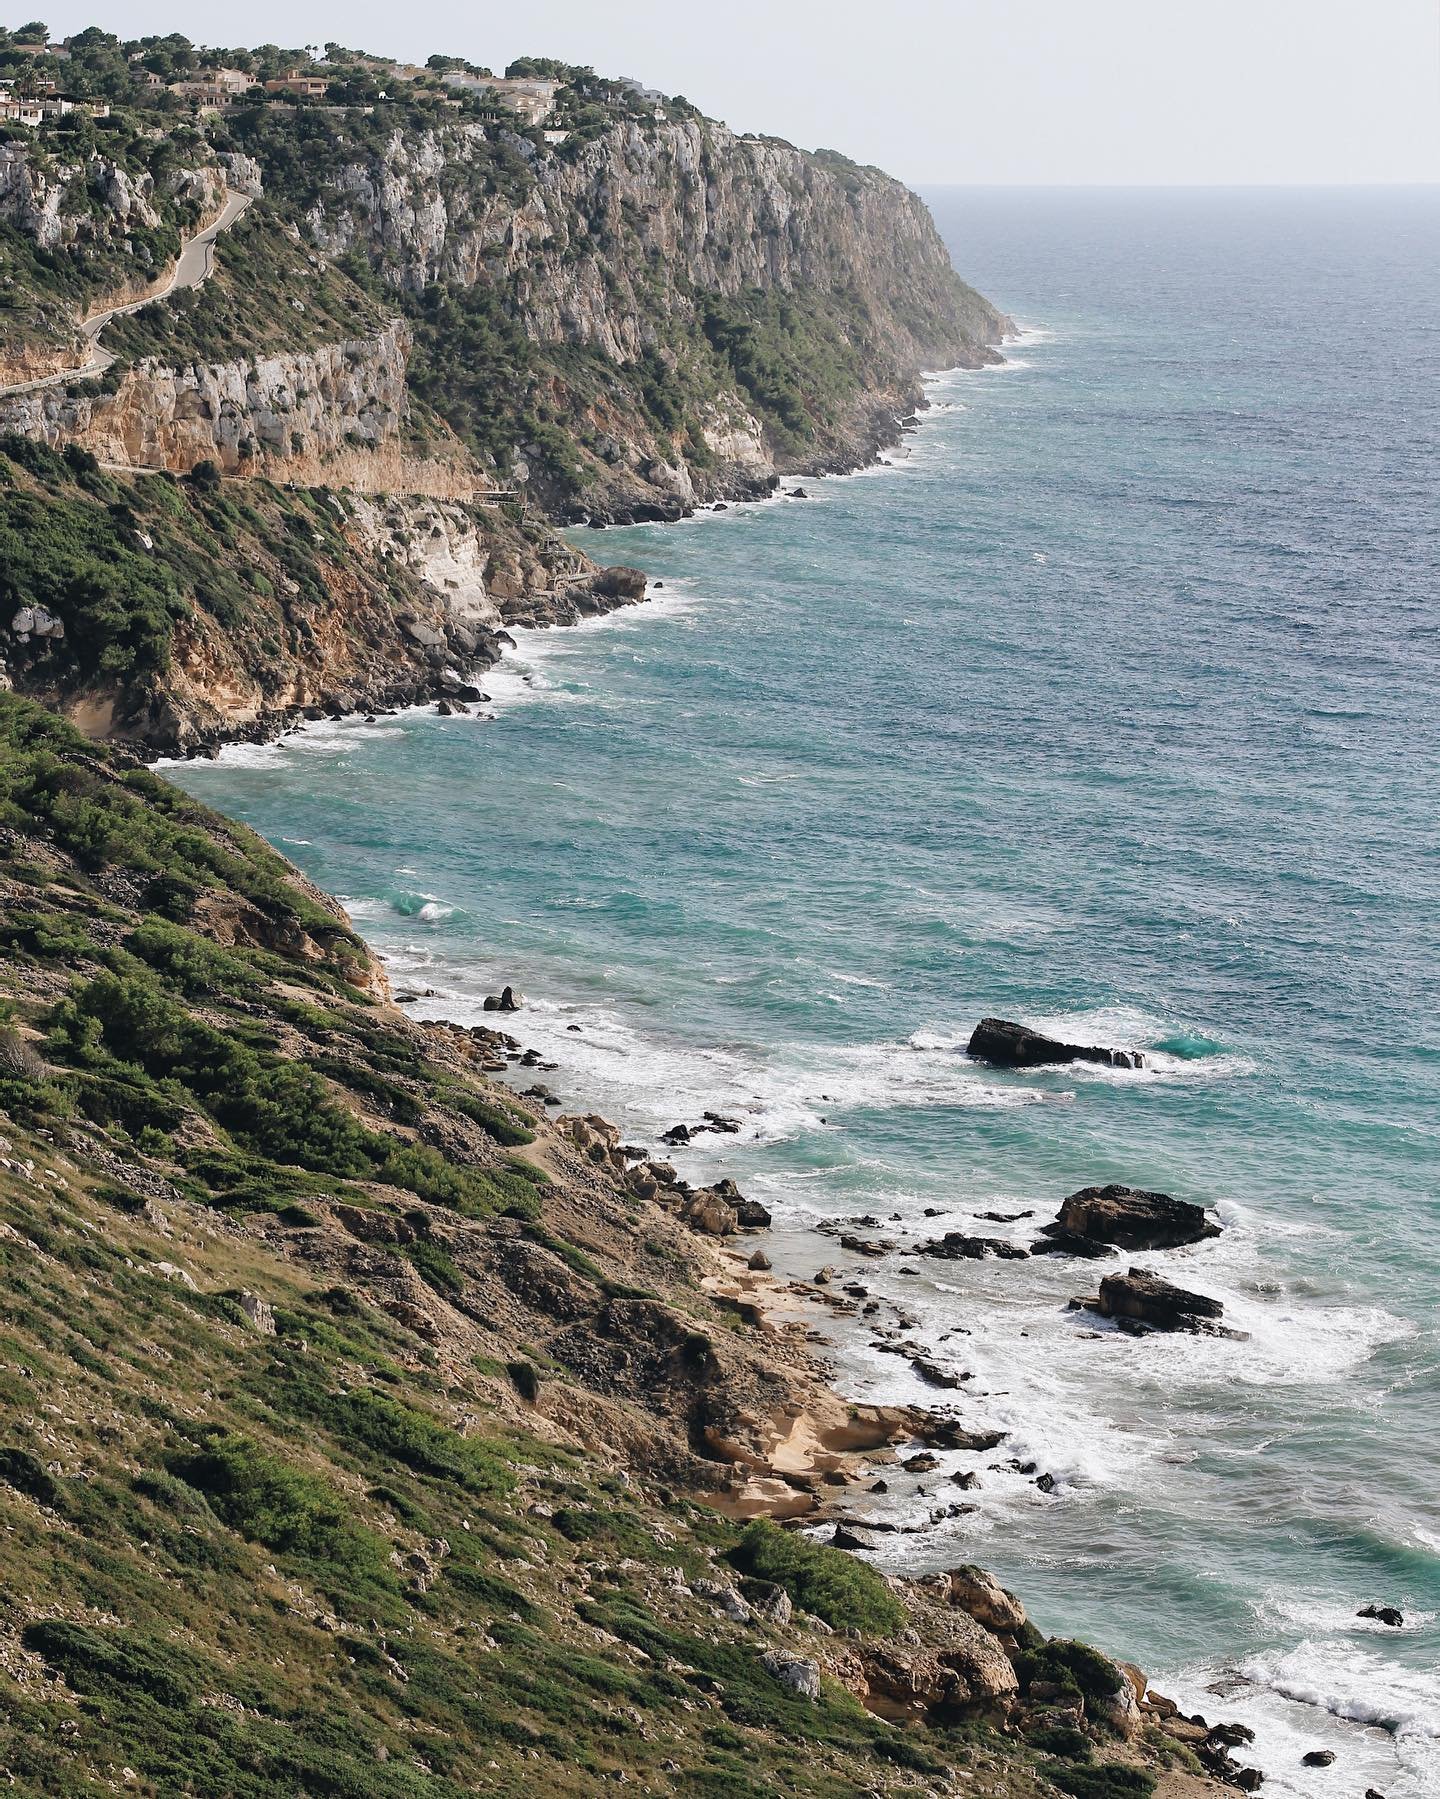 Down to the coast

#mediterraneansea #mallorca #naturephotography